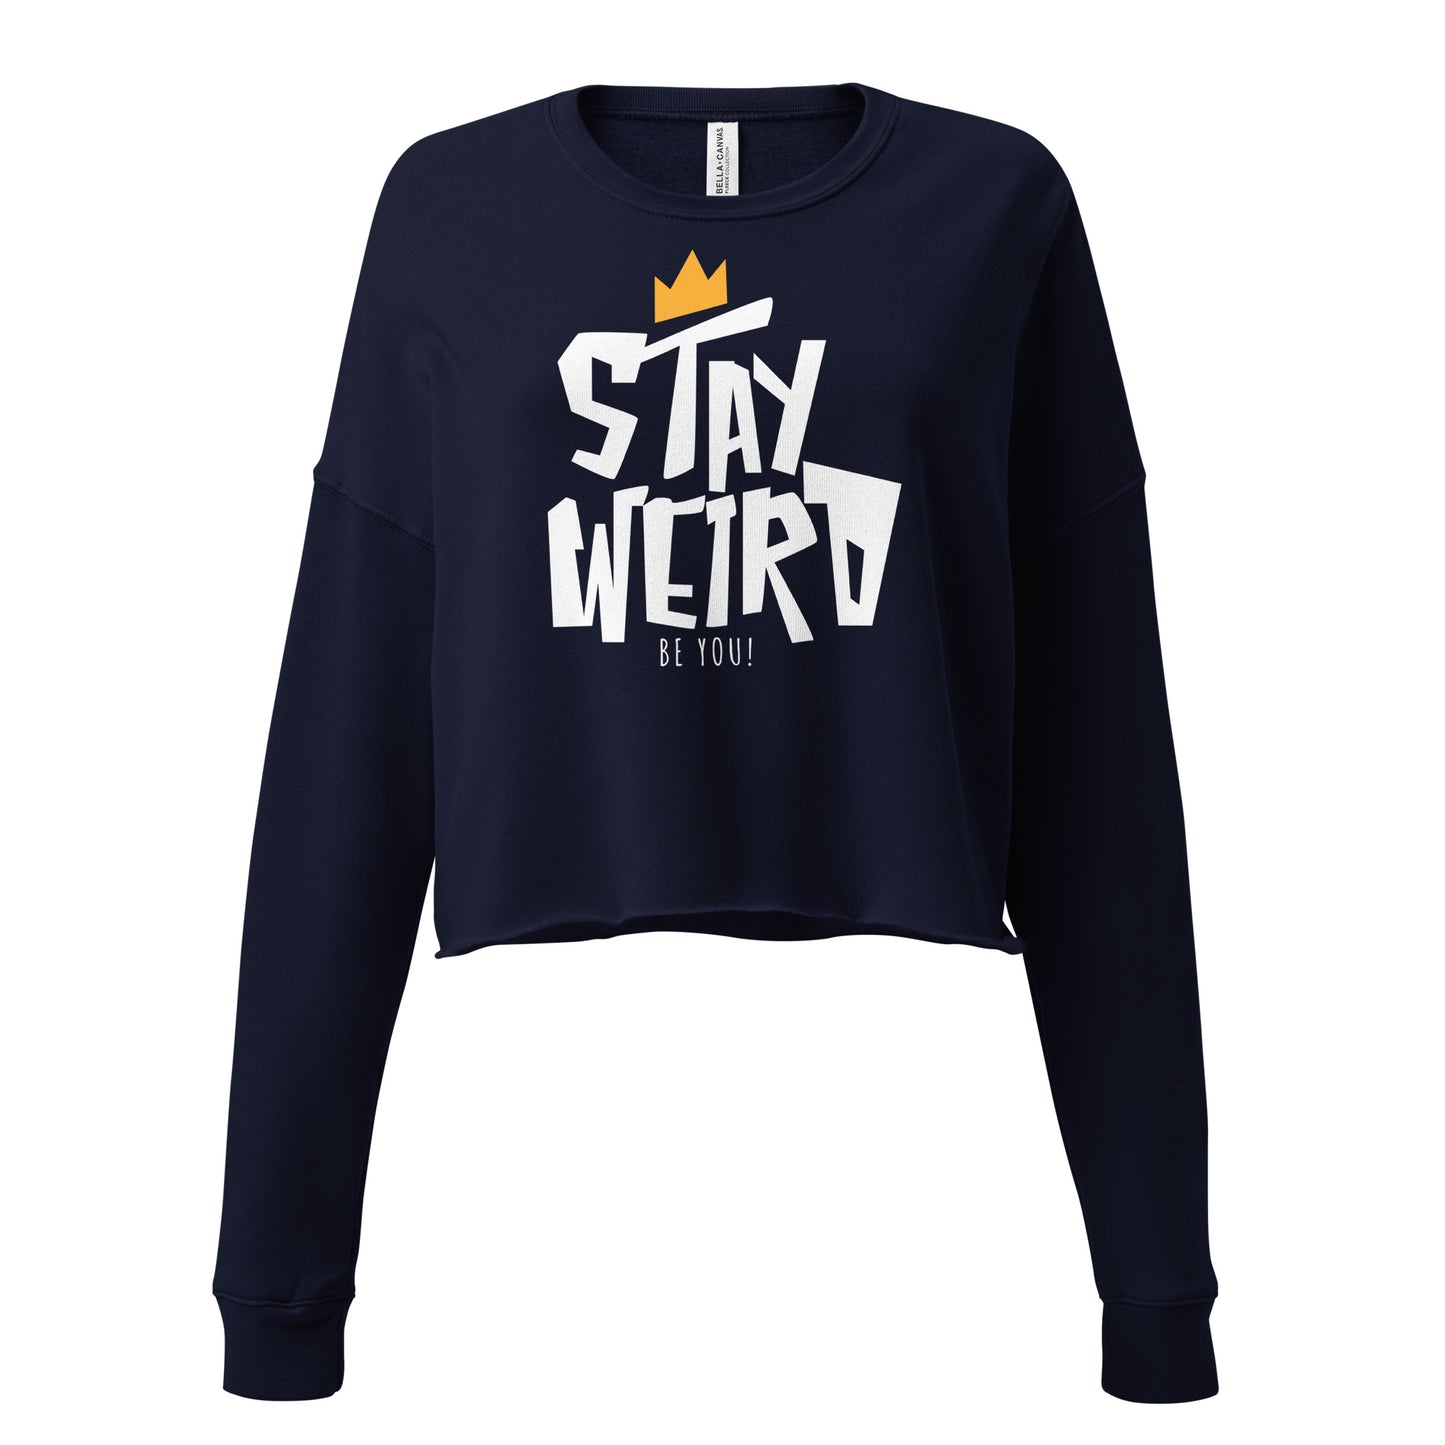 Stay Weird: Be You! Crop Sweatshirt